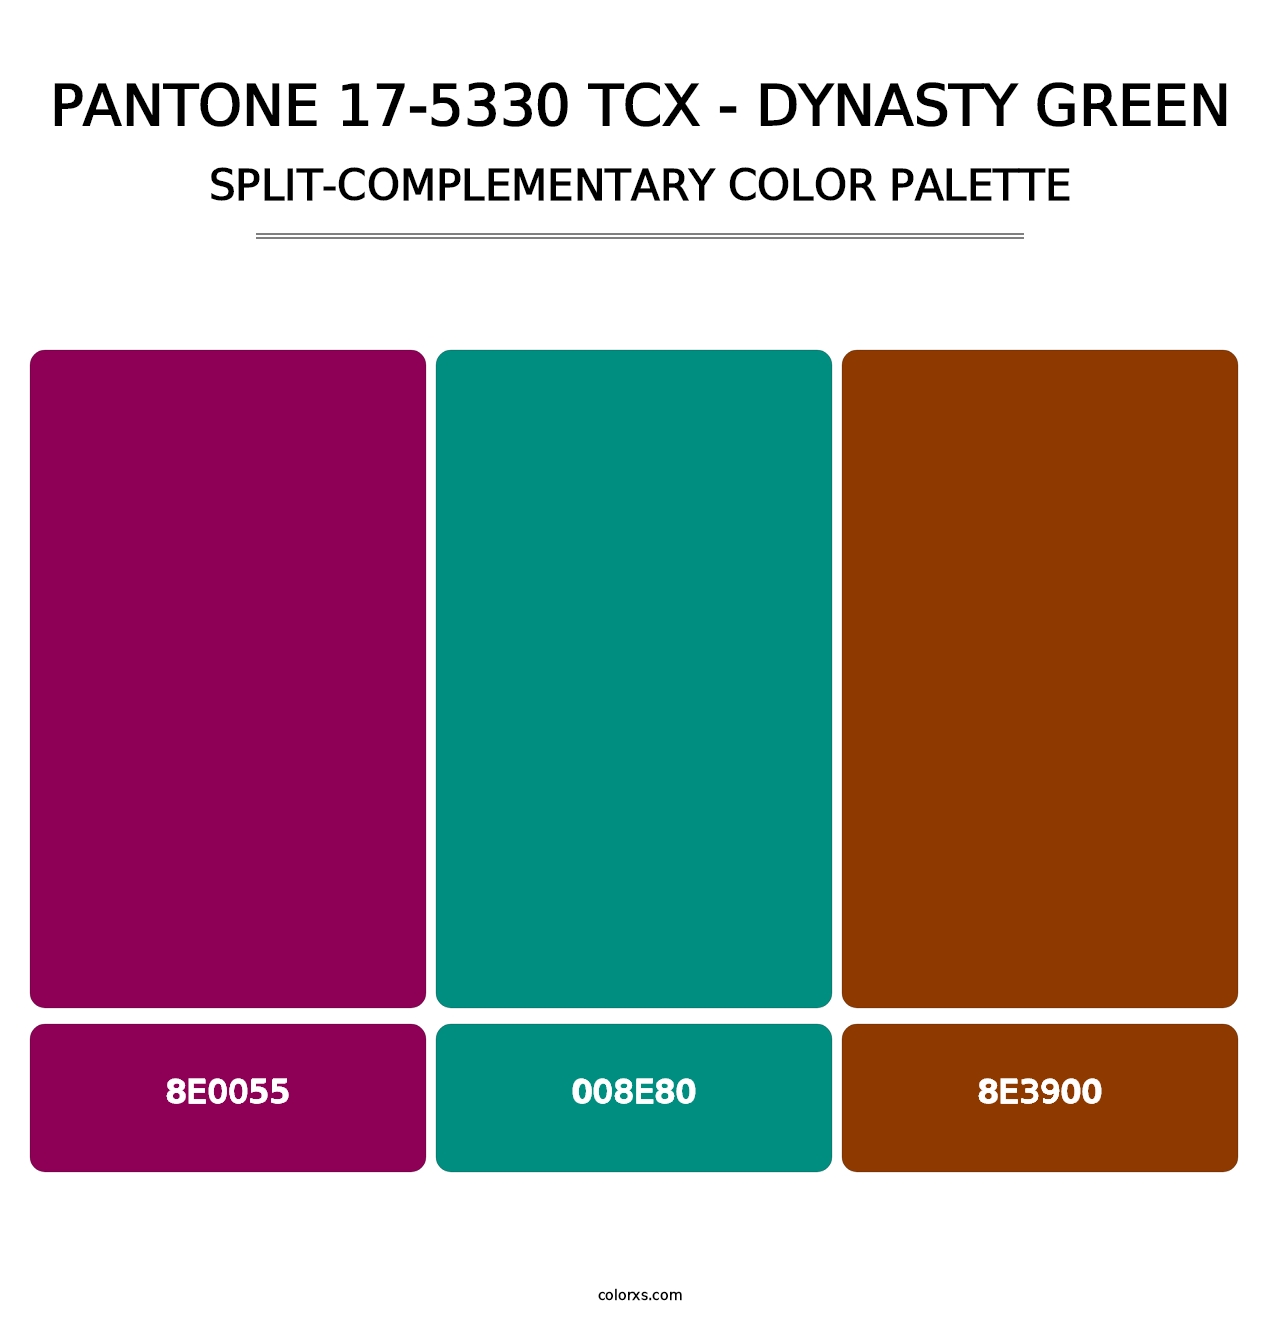 PANTONE 17-5330 TCX - Dynasty Green - Split-Complementary Color Palette